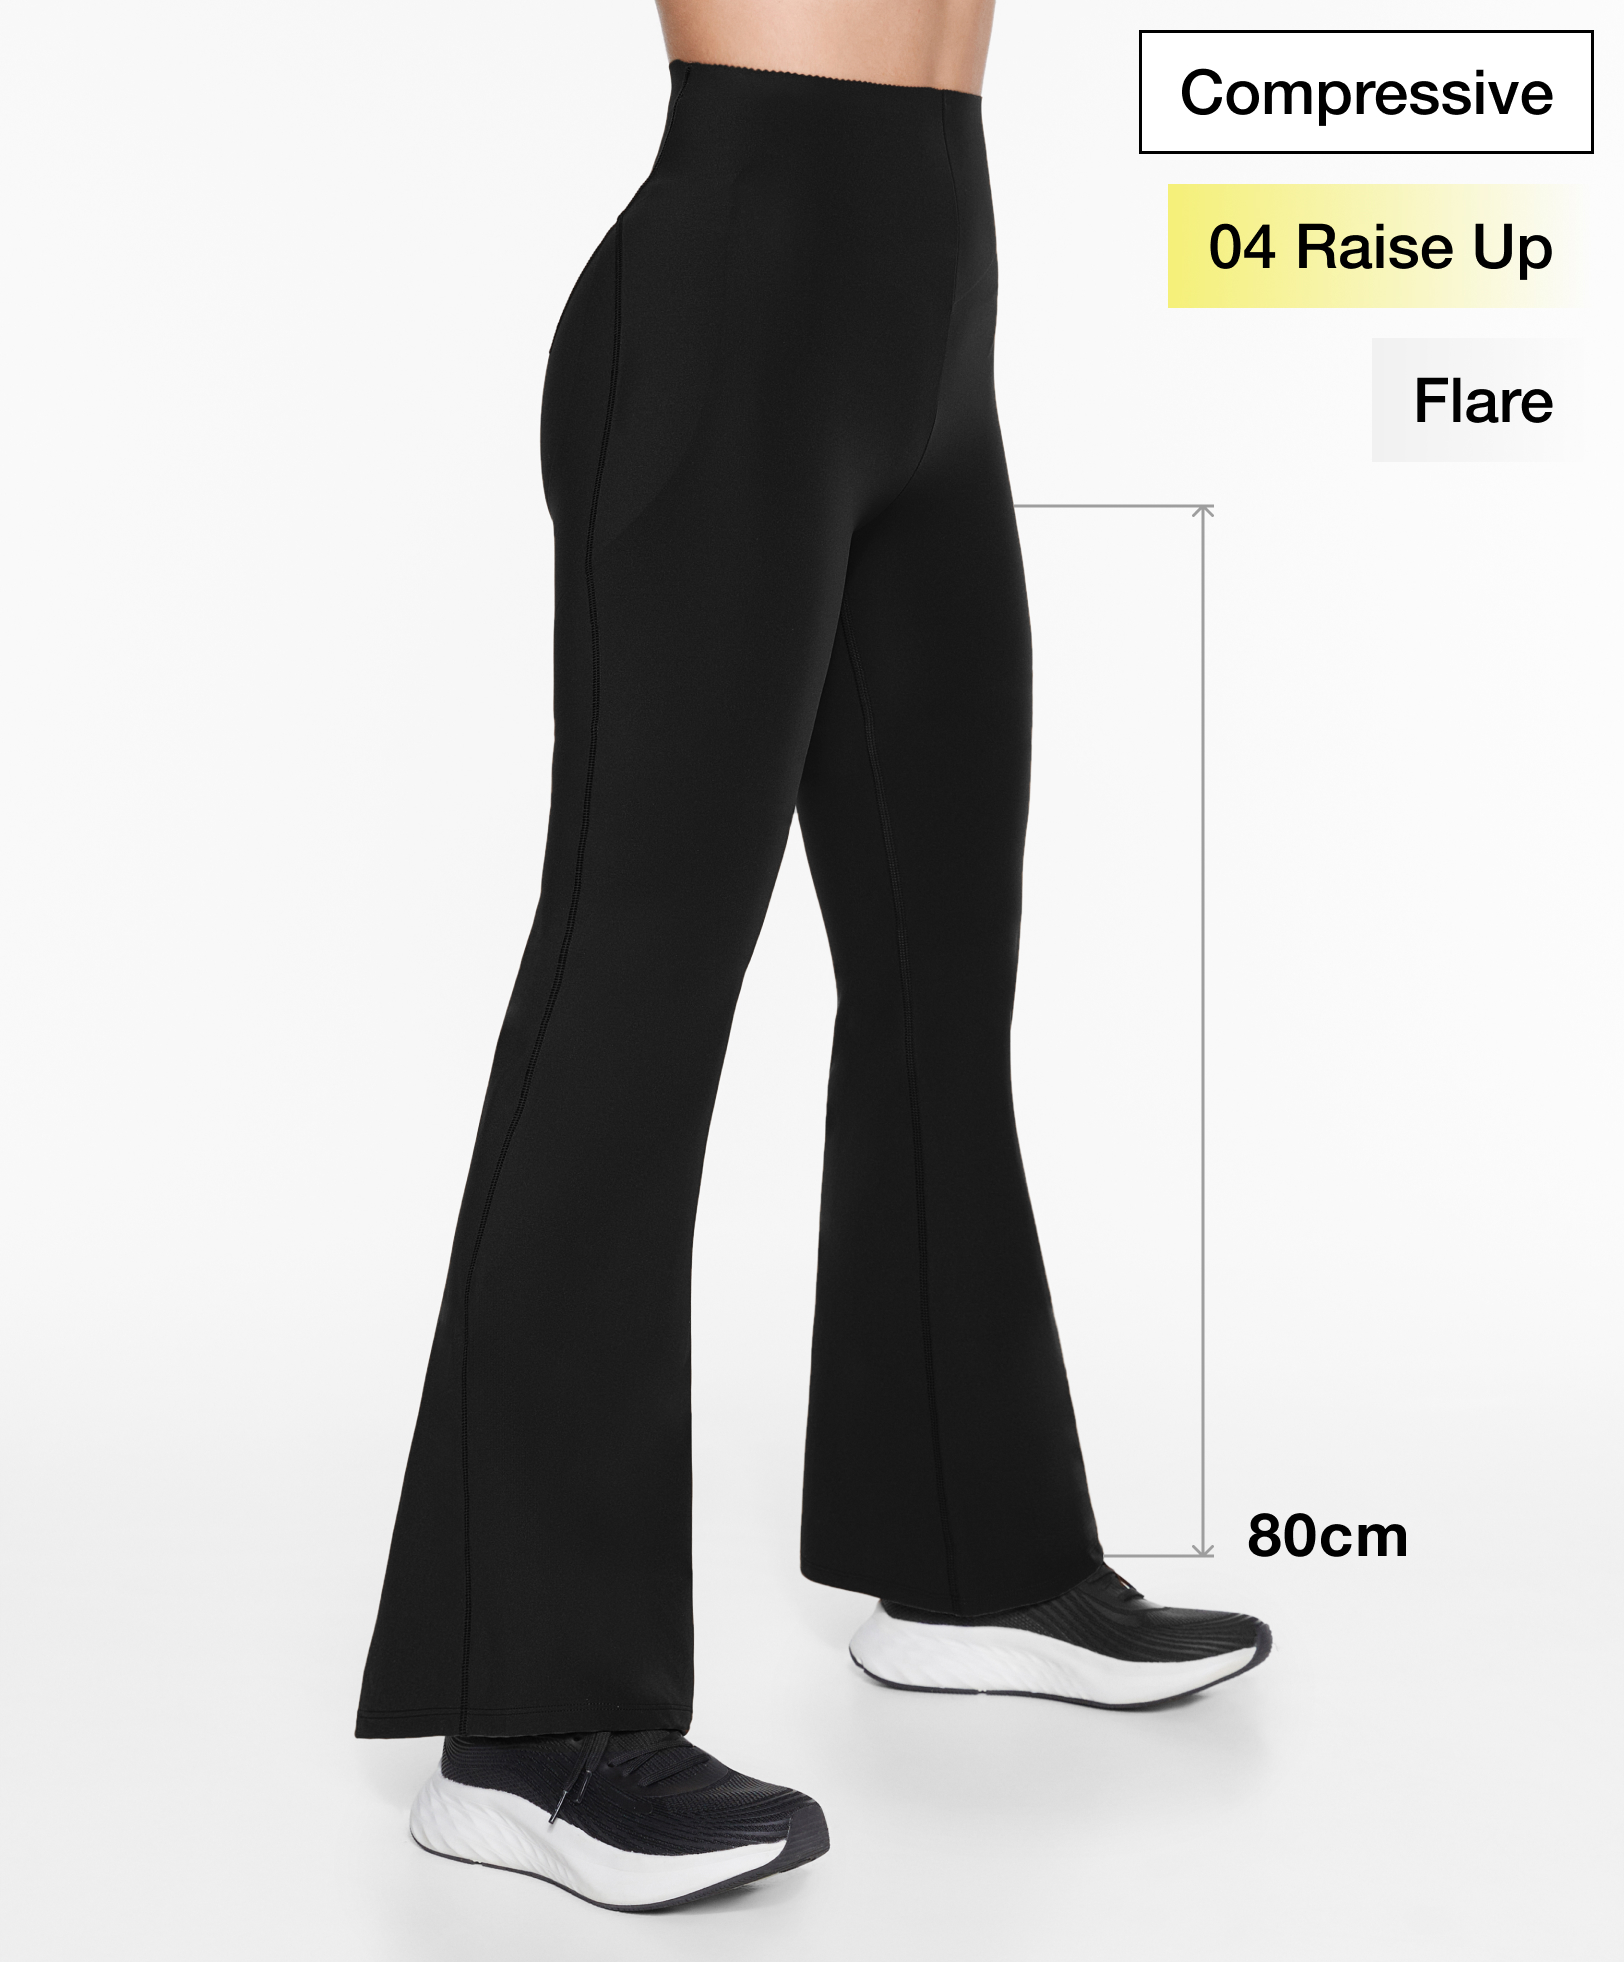 Pantaloni flare Compressive raise up